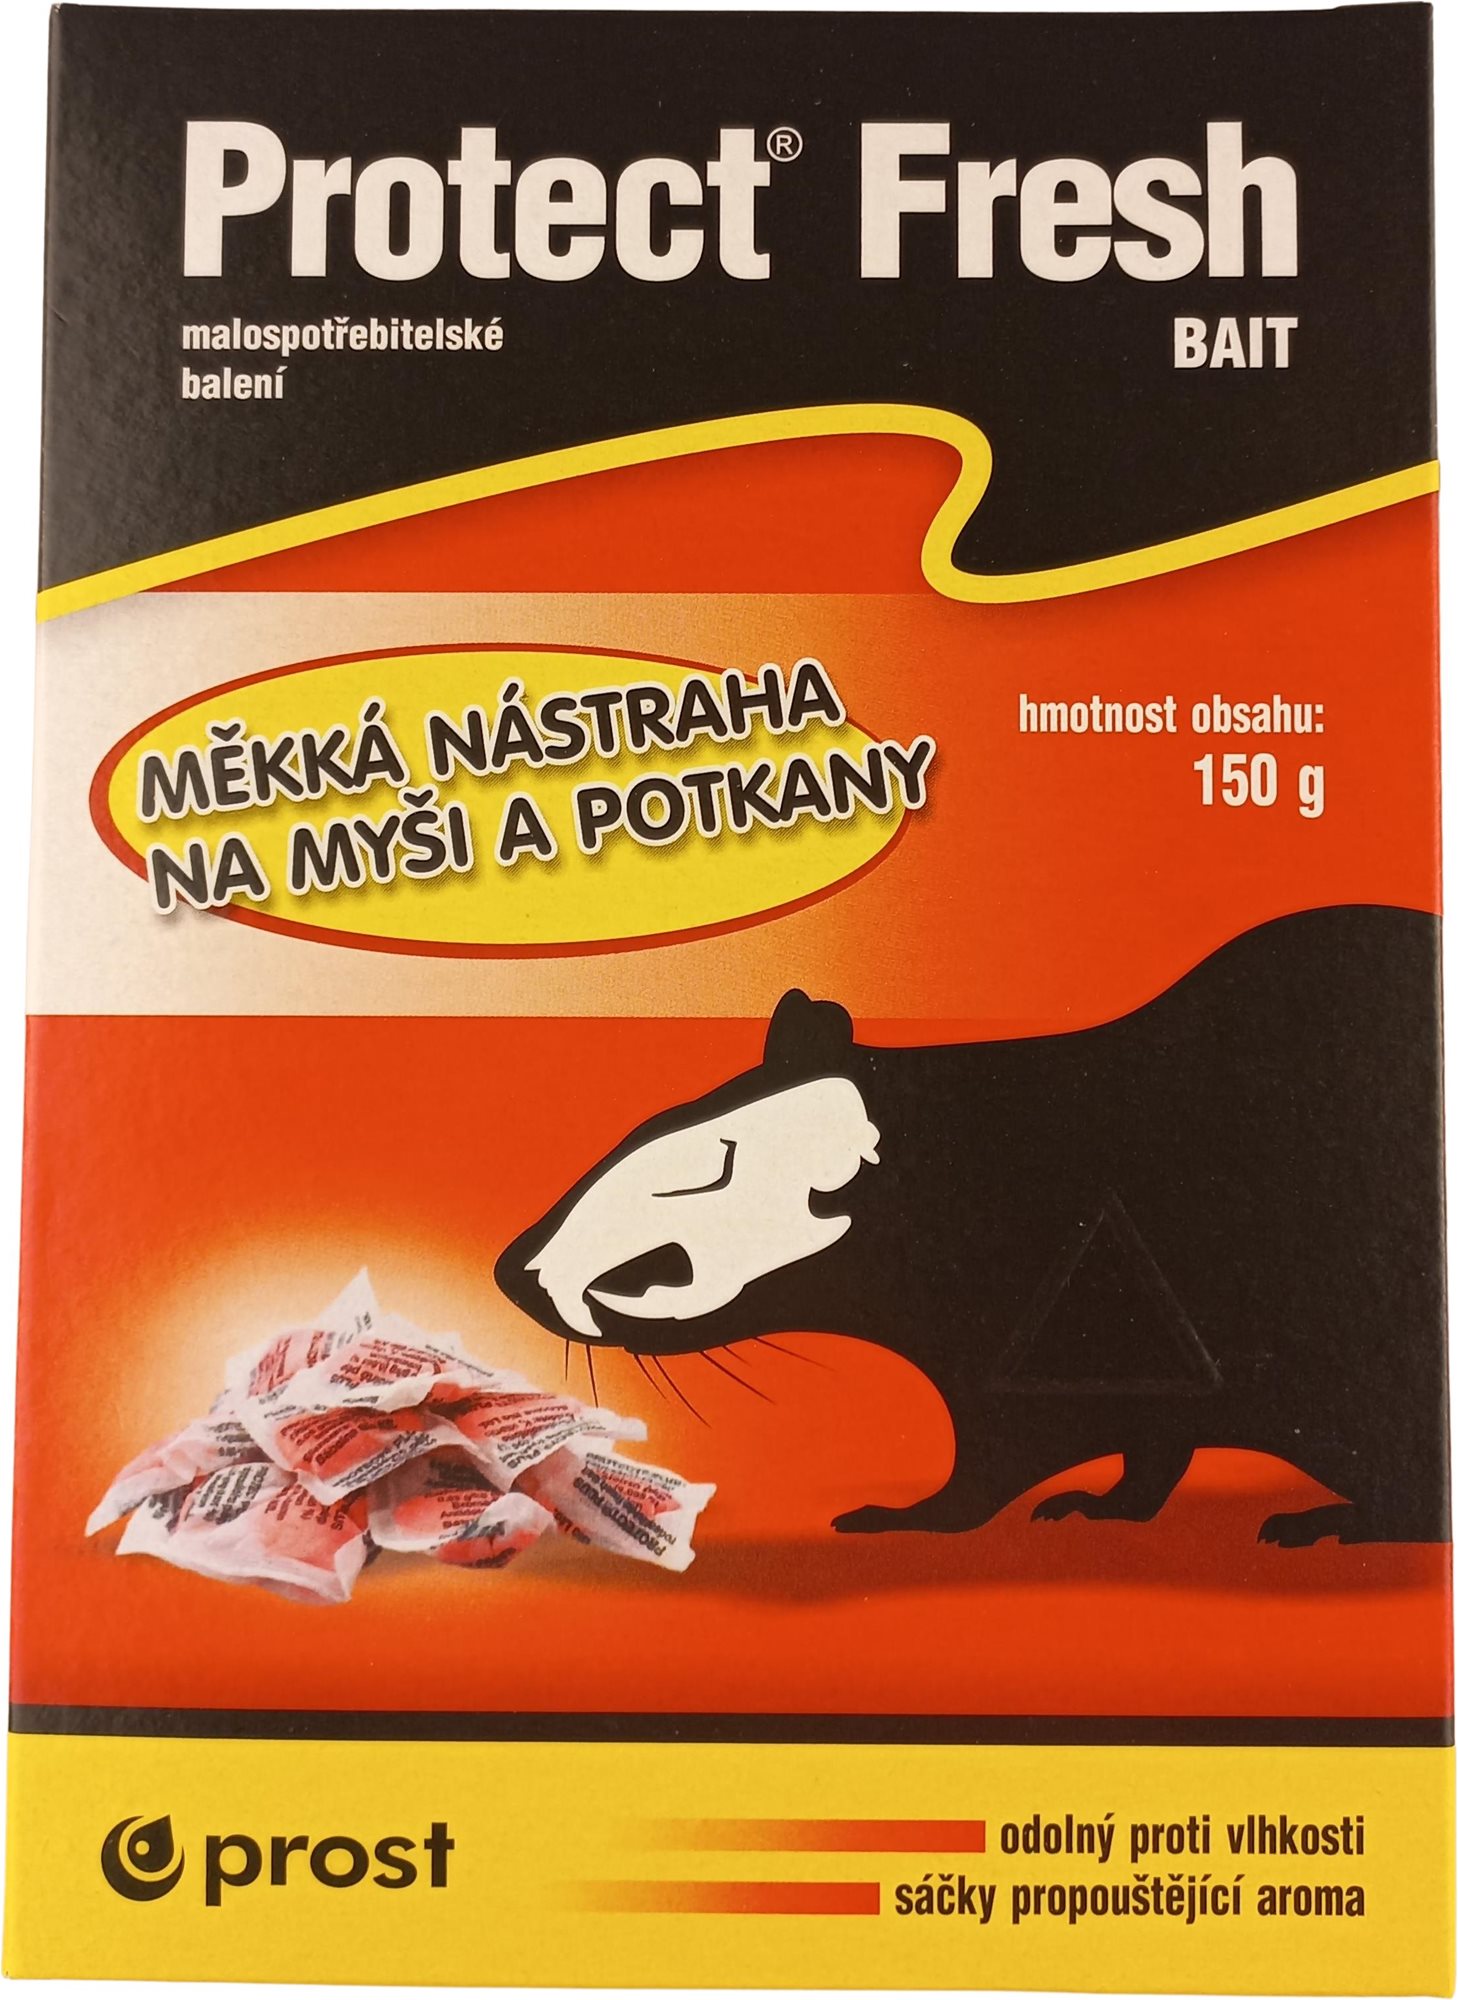 Protect® FRESH BAIT - pasta krabička